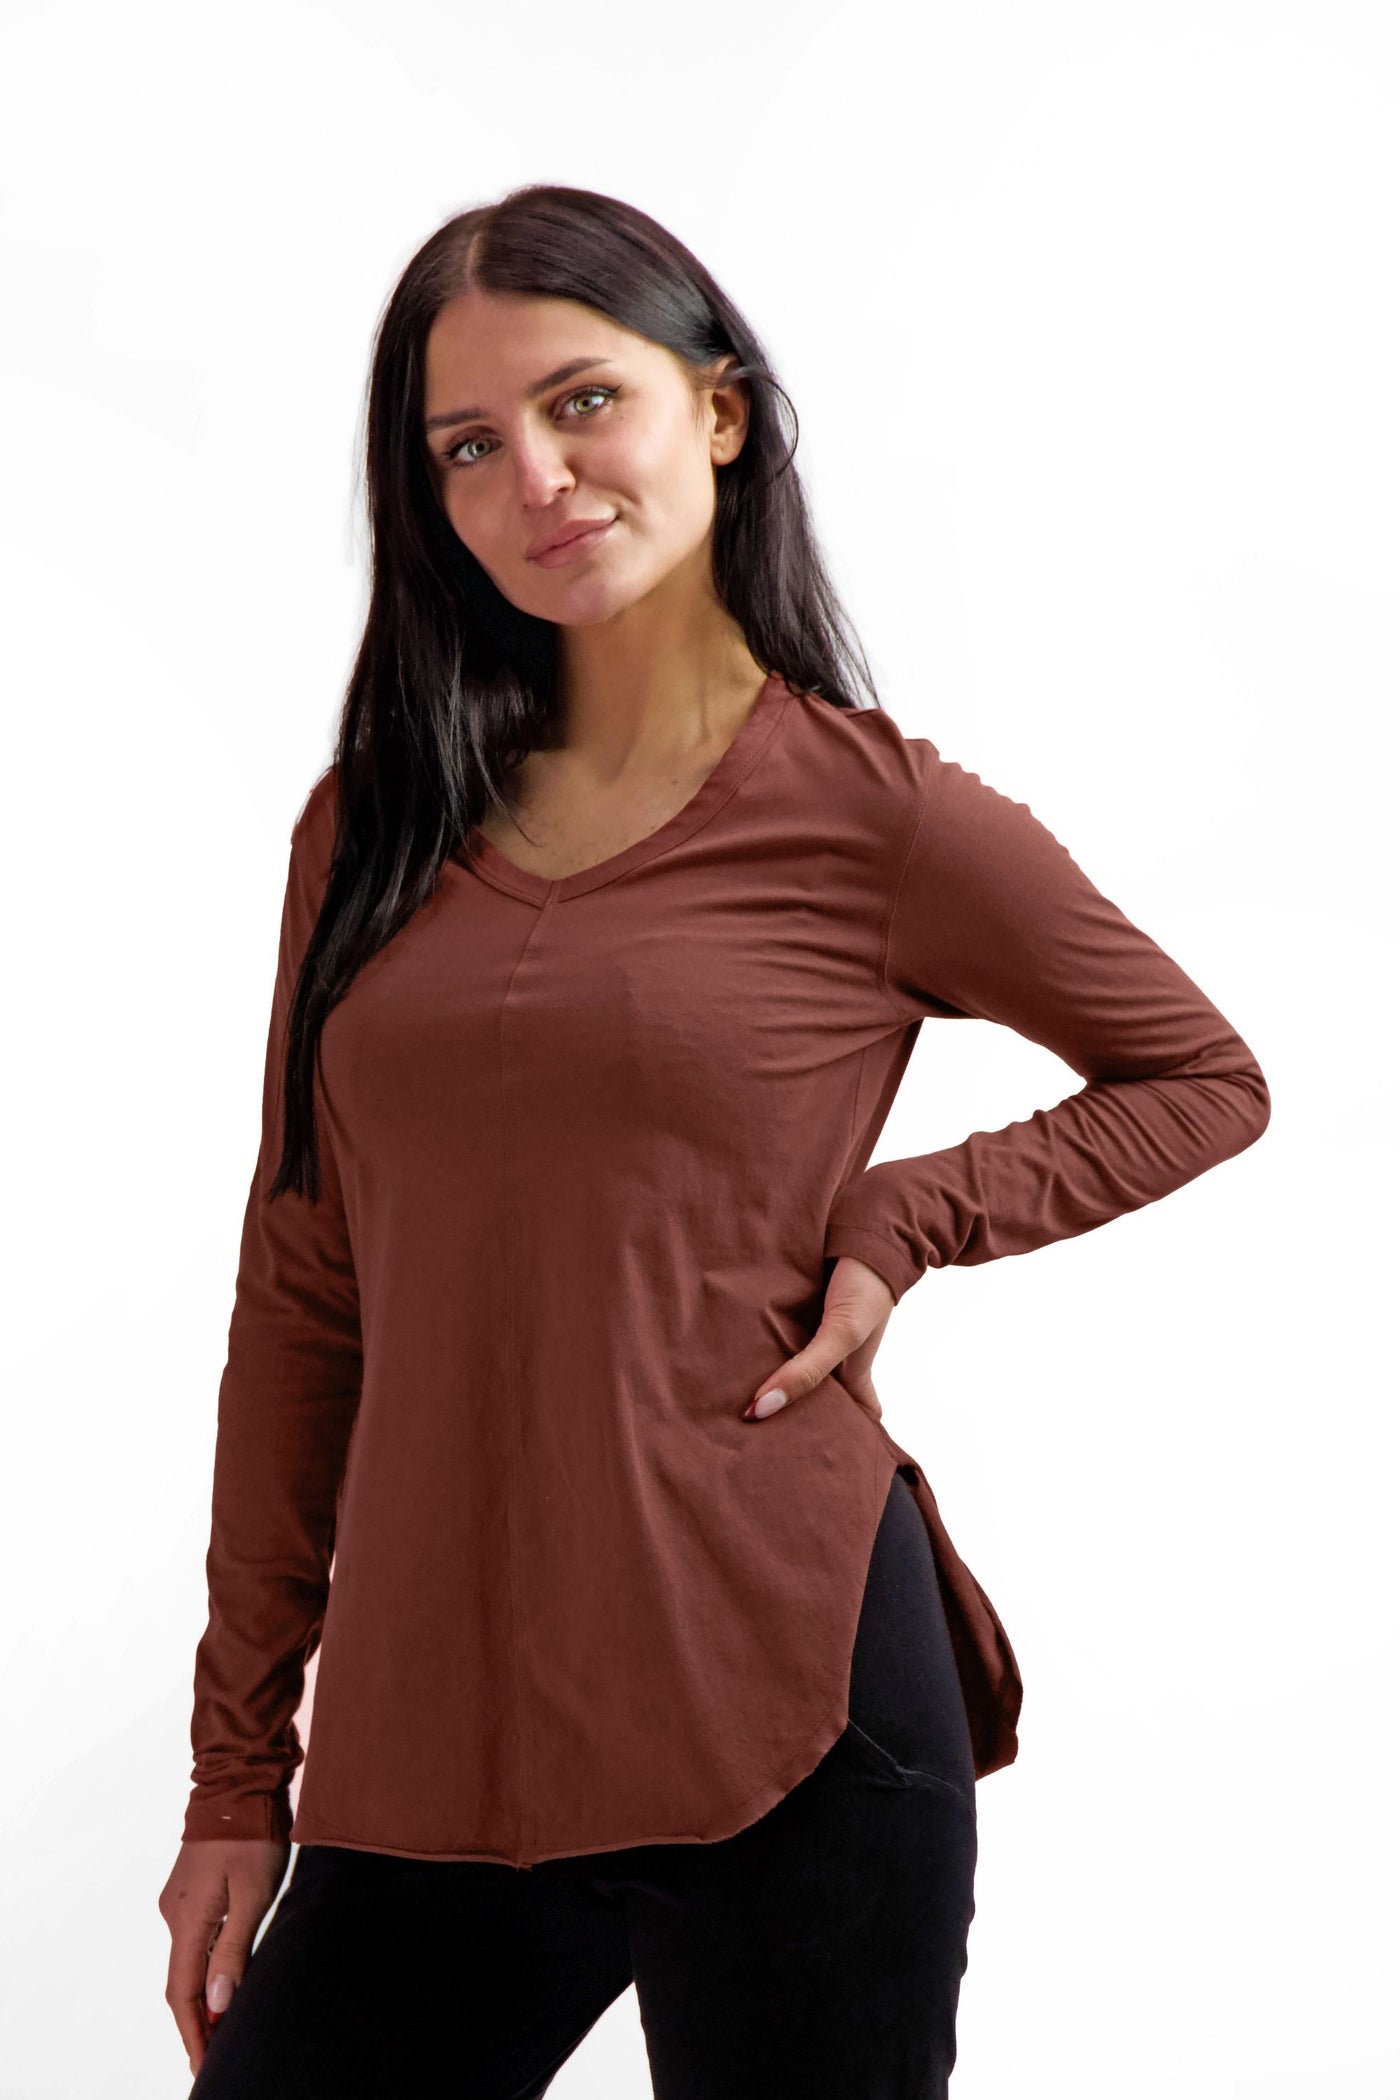  GUBUYI Women's Plain Long Sleeve V-Neck T-Shirt Basic